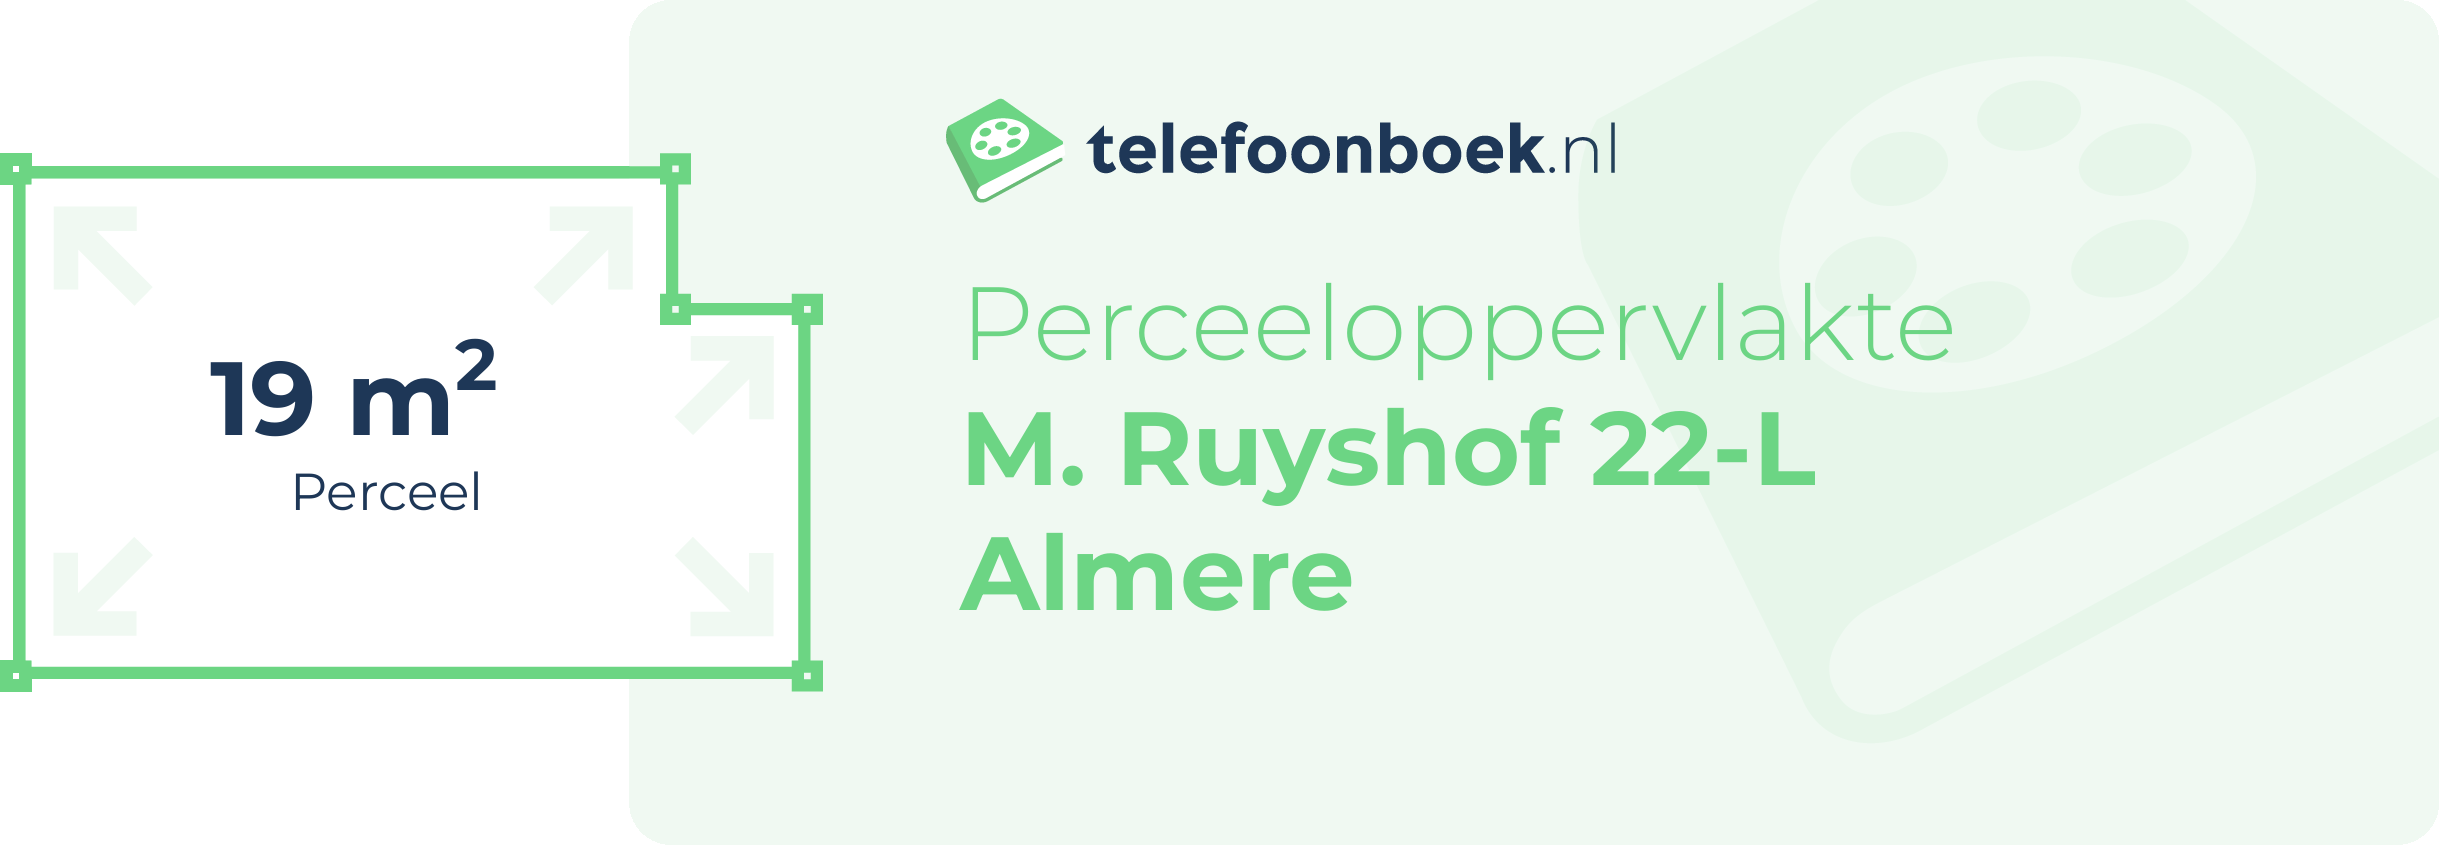 Perceeloppervlakte M. Ruyshof 22-L Almere